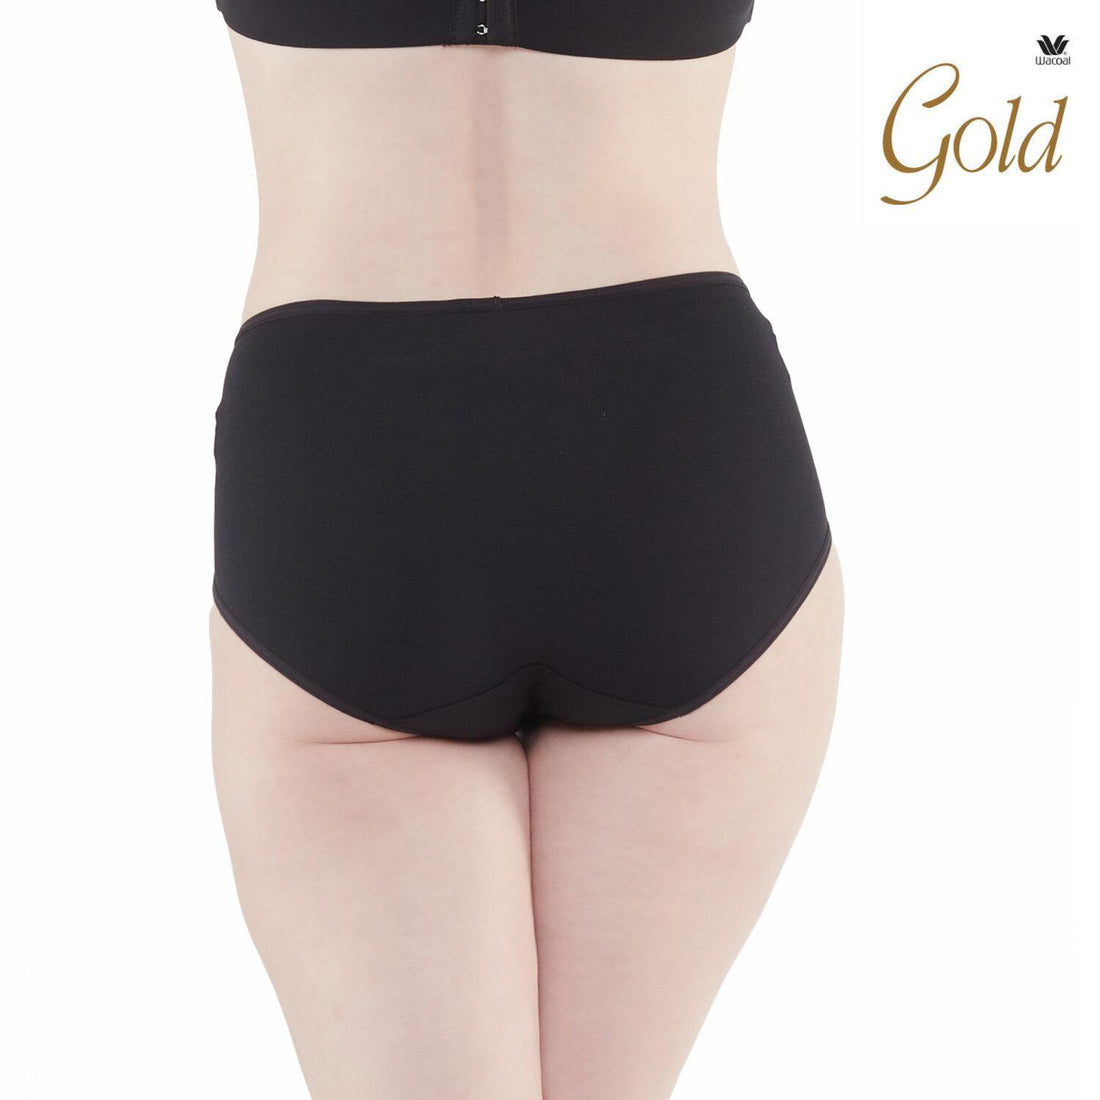 Wacoal Gold Panty กางเกงใน รุ่น W6O541 สีดำ (BL)